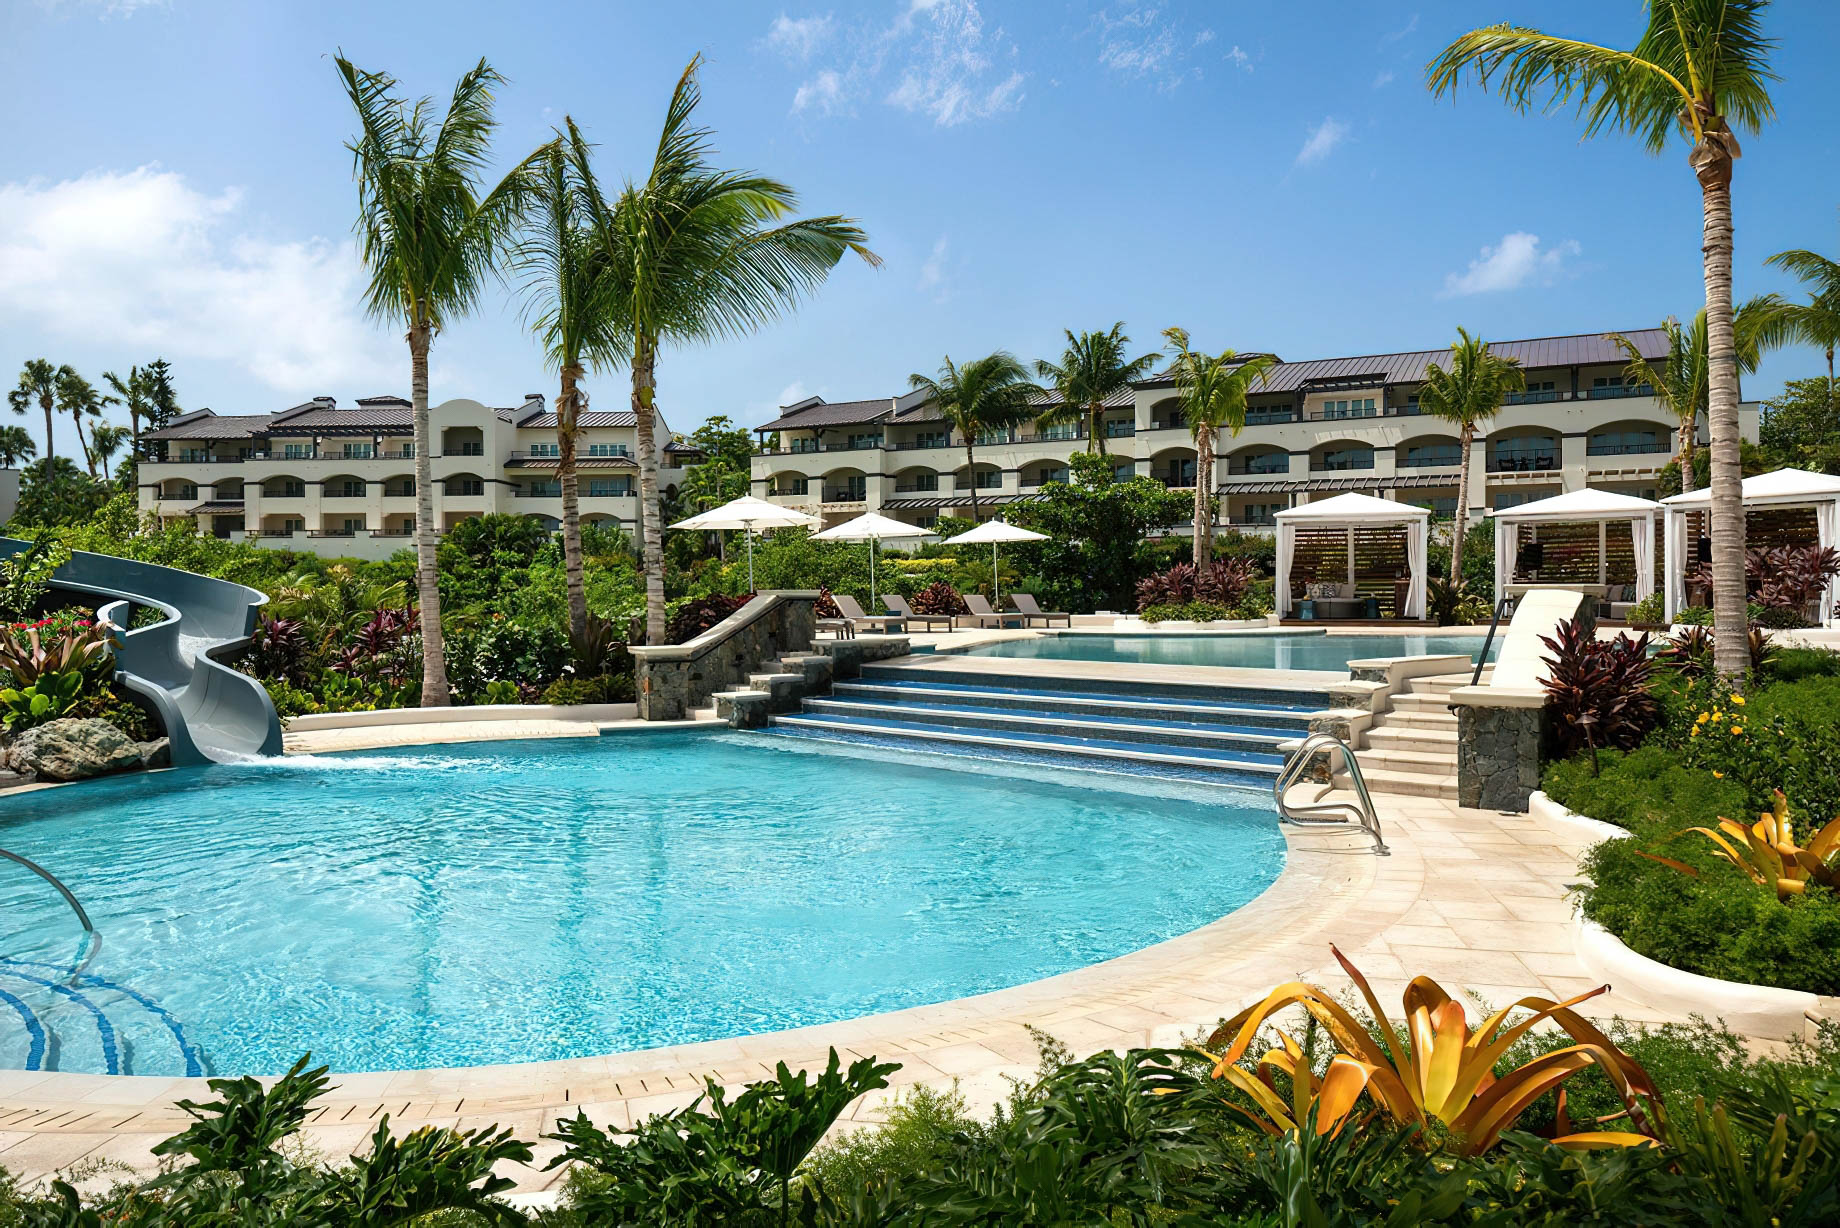 The Ritz-Carlton, St. Thomas Resort – St. Thomas, U.S. Virgin Islands – Exterior Pool